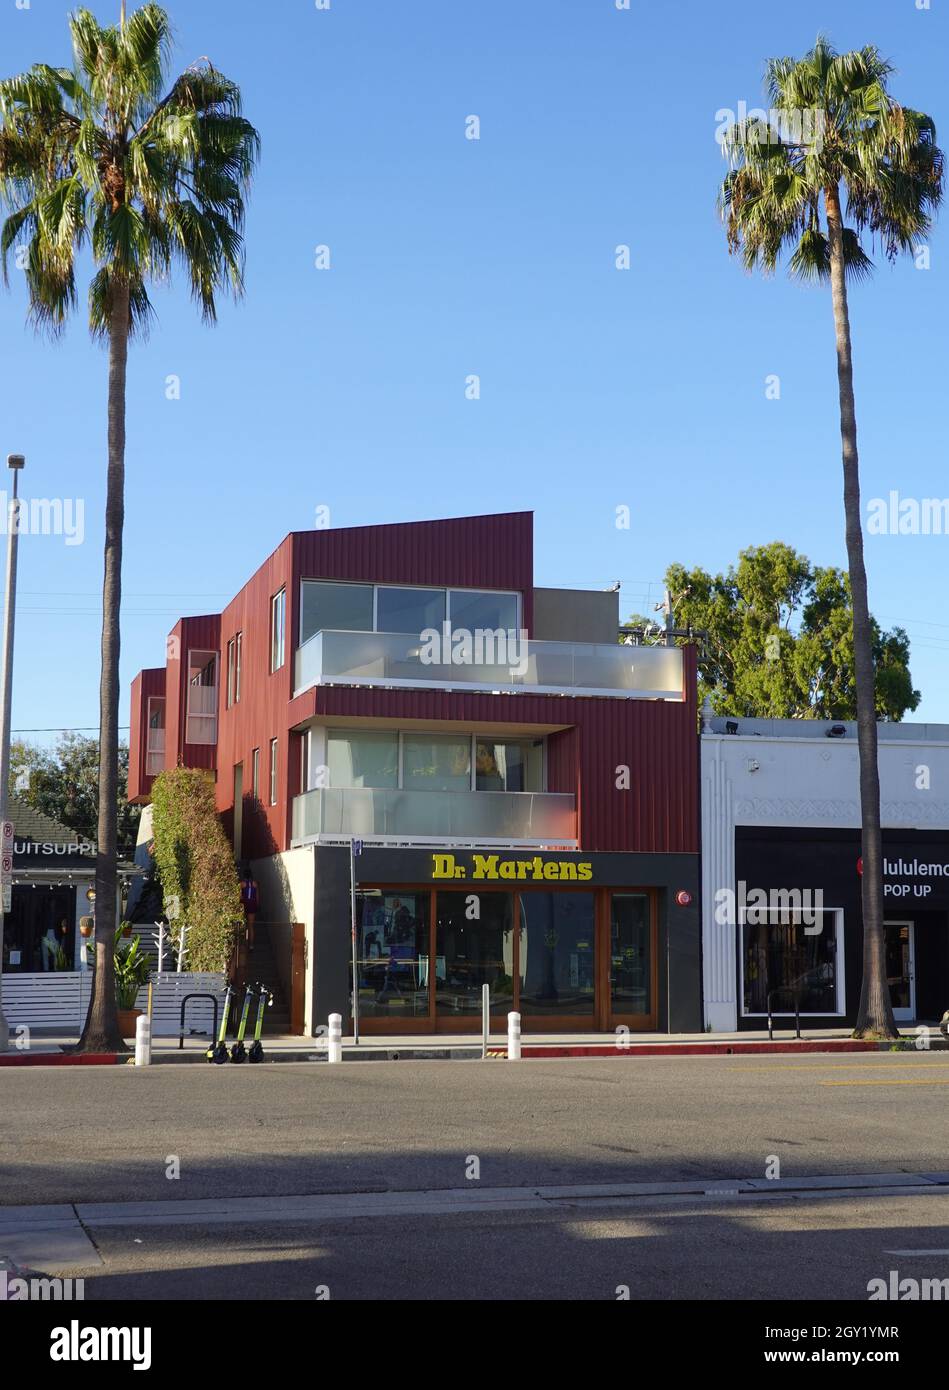 The Dr Martens store Abbot Kinney Boulevard, Venice, California, USA Stock  Photo - Alamy